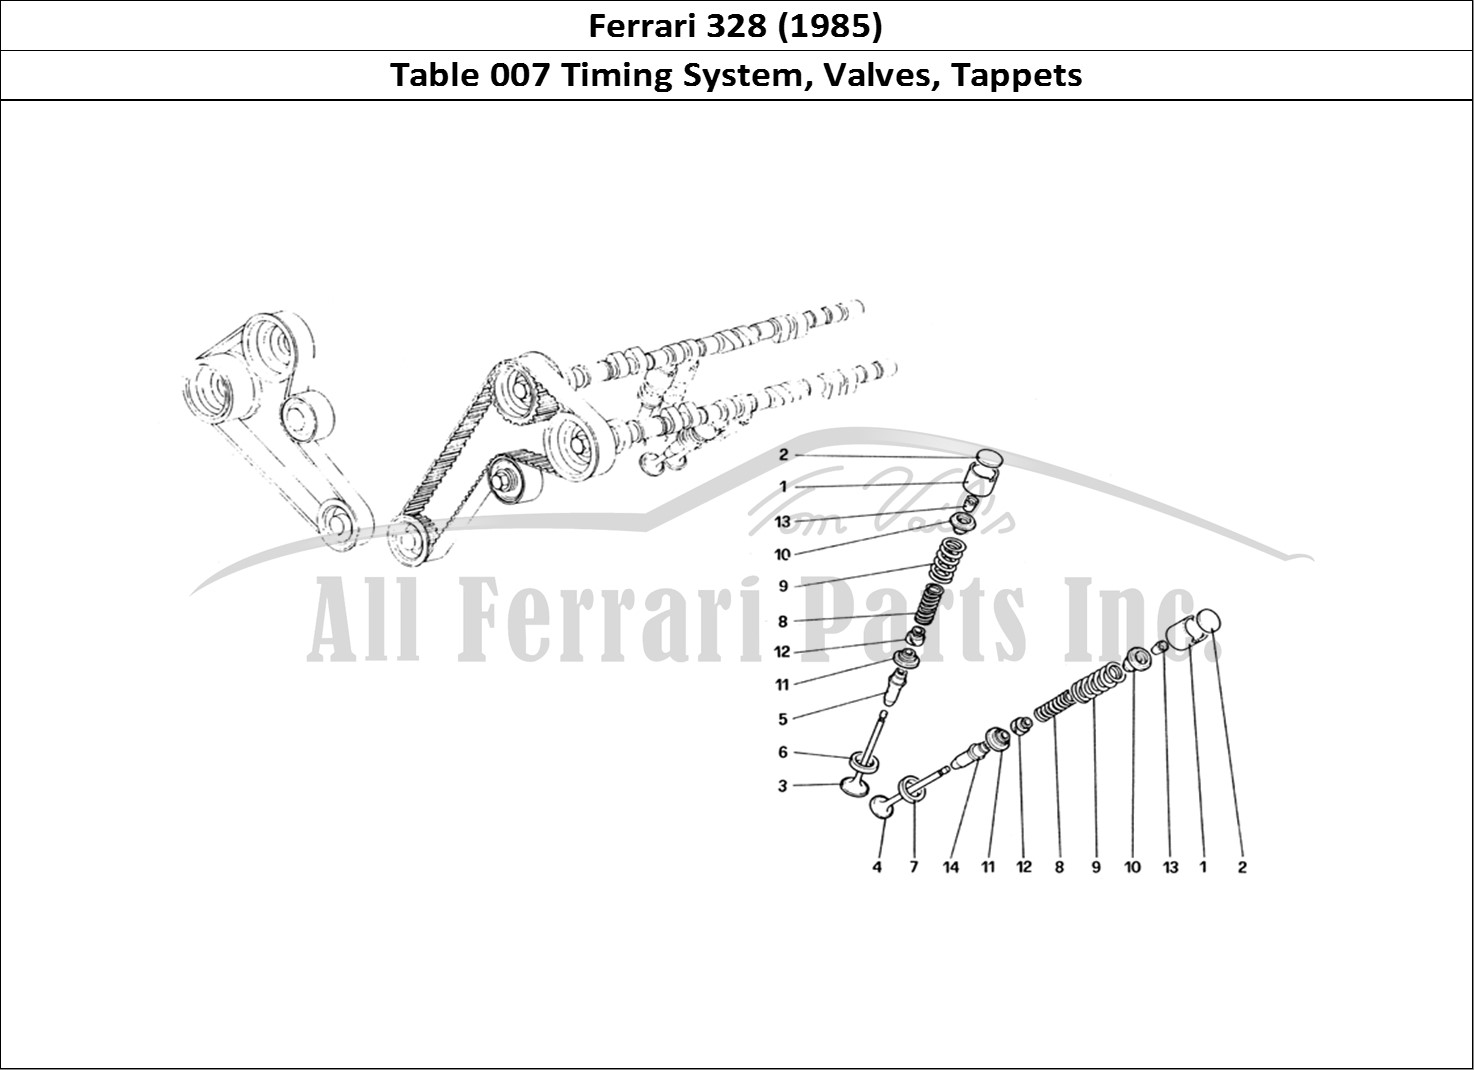 Ferrari Parts Ferrari 328 (1985) Page 007 Timing System - Tappets